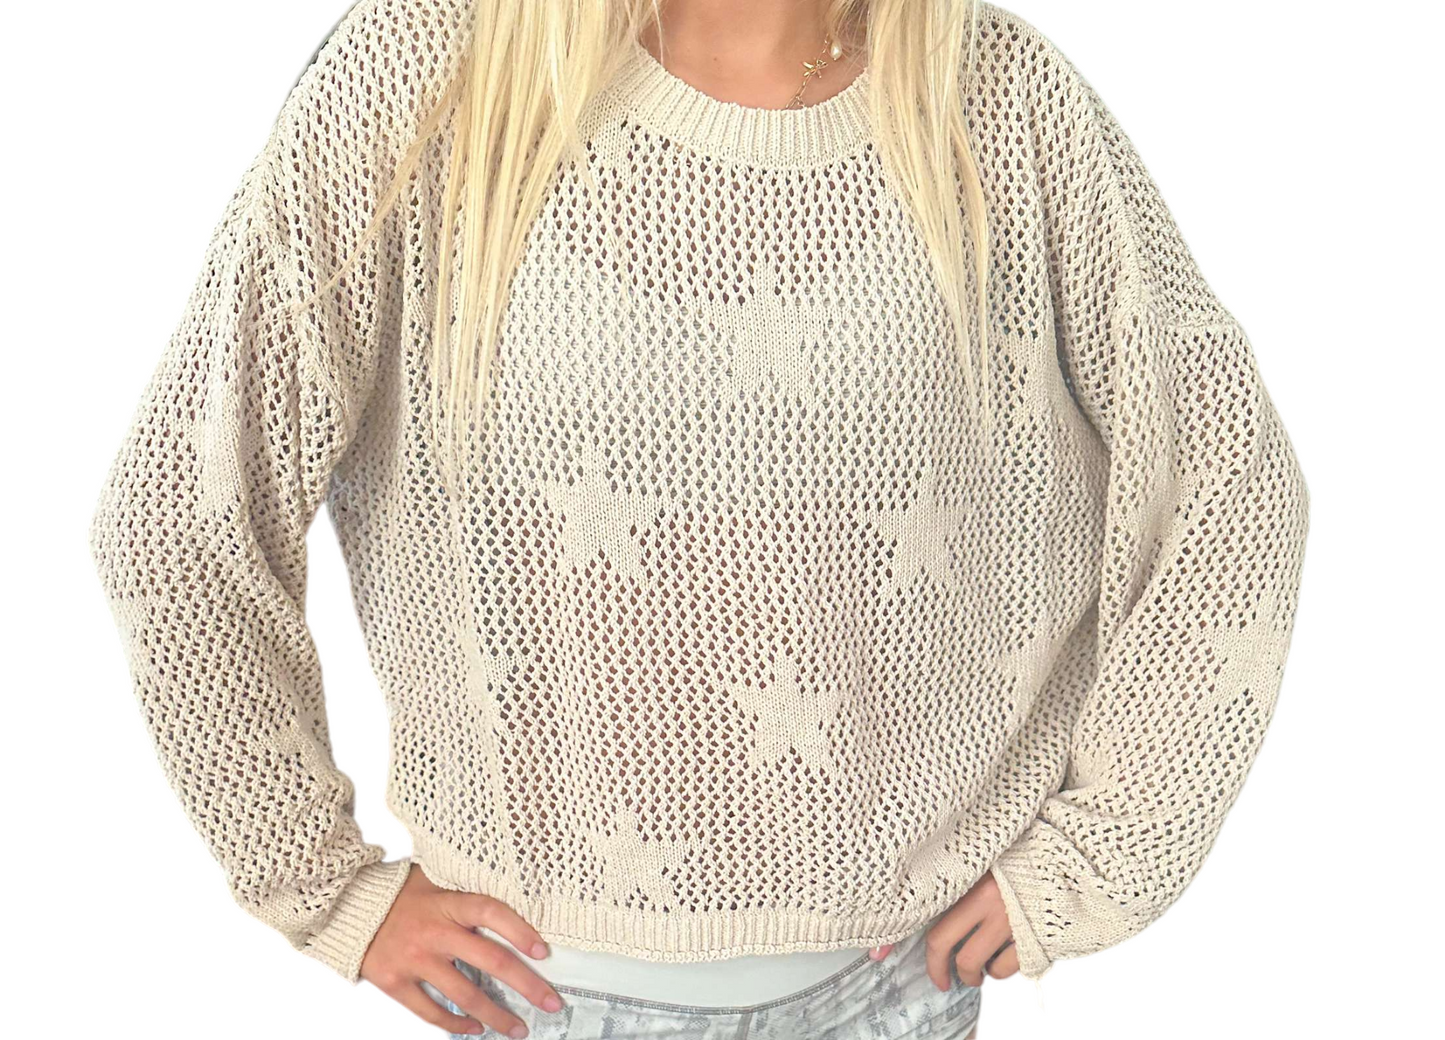 Star crochet sweater